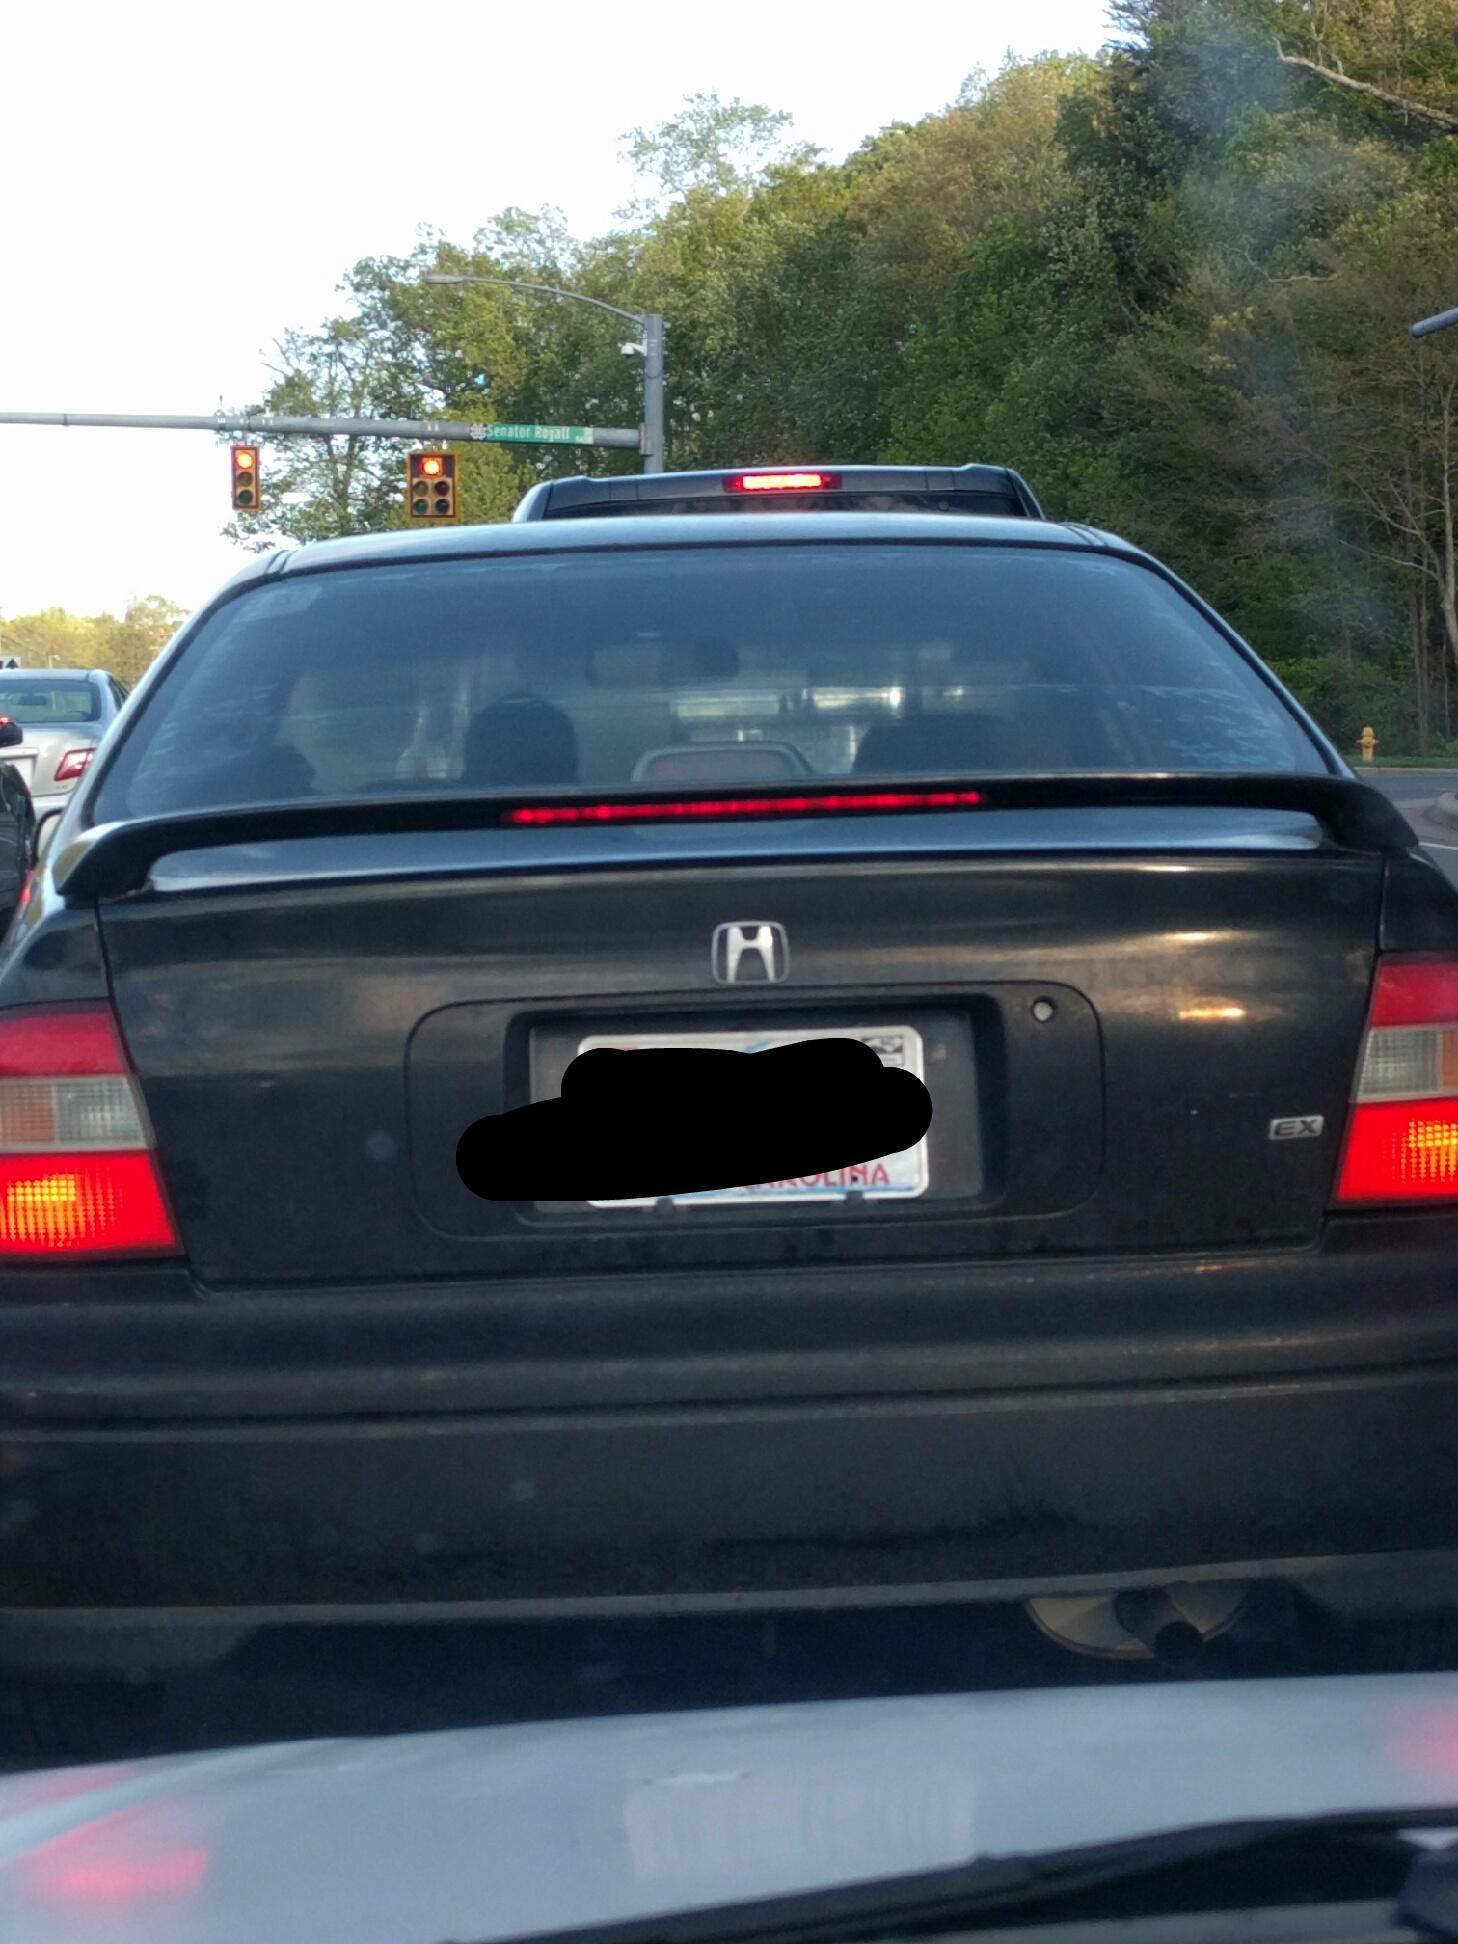 Light Blue Honda Logo - This car's Honda emblem is upside down - Imgur